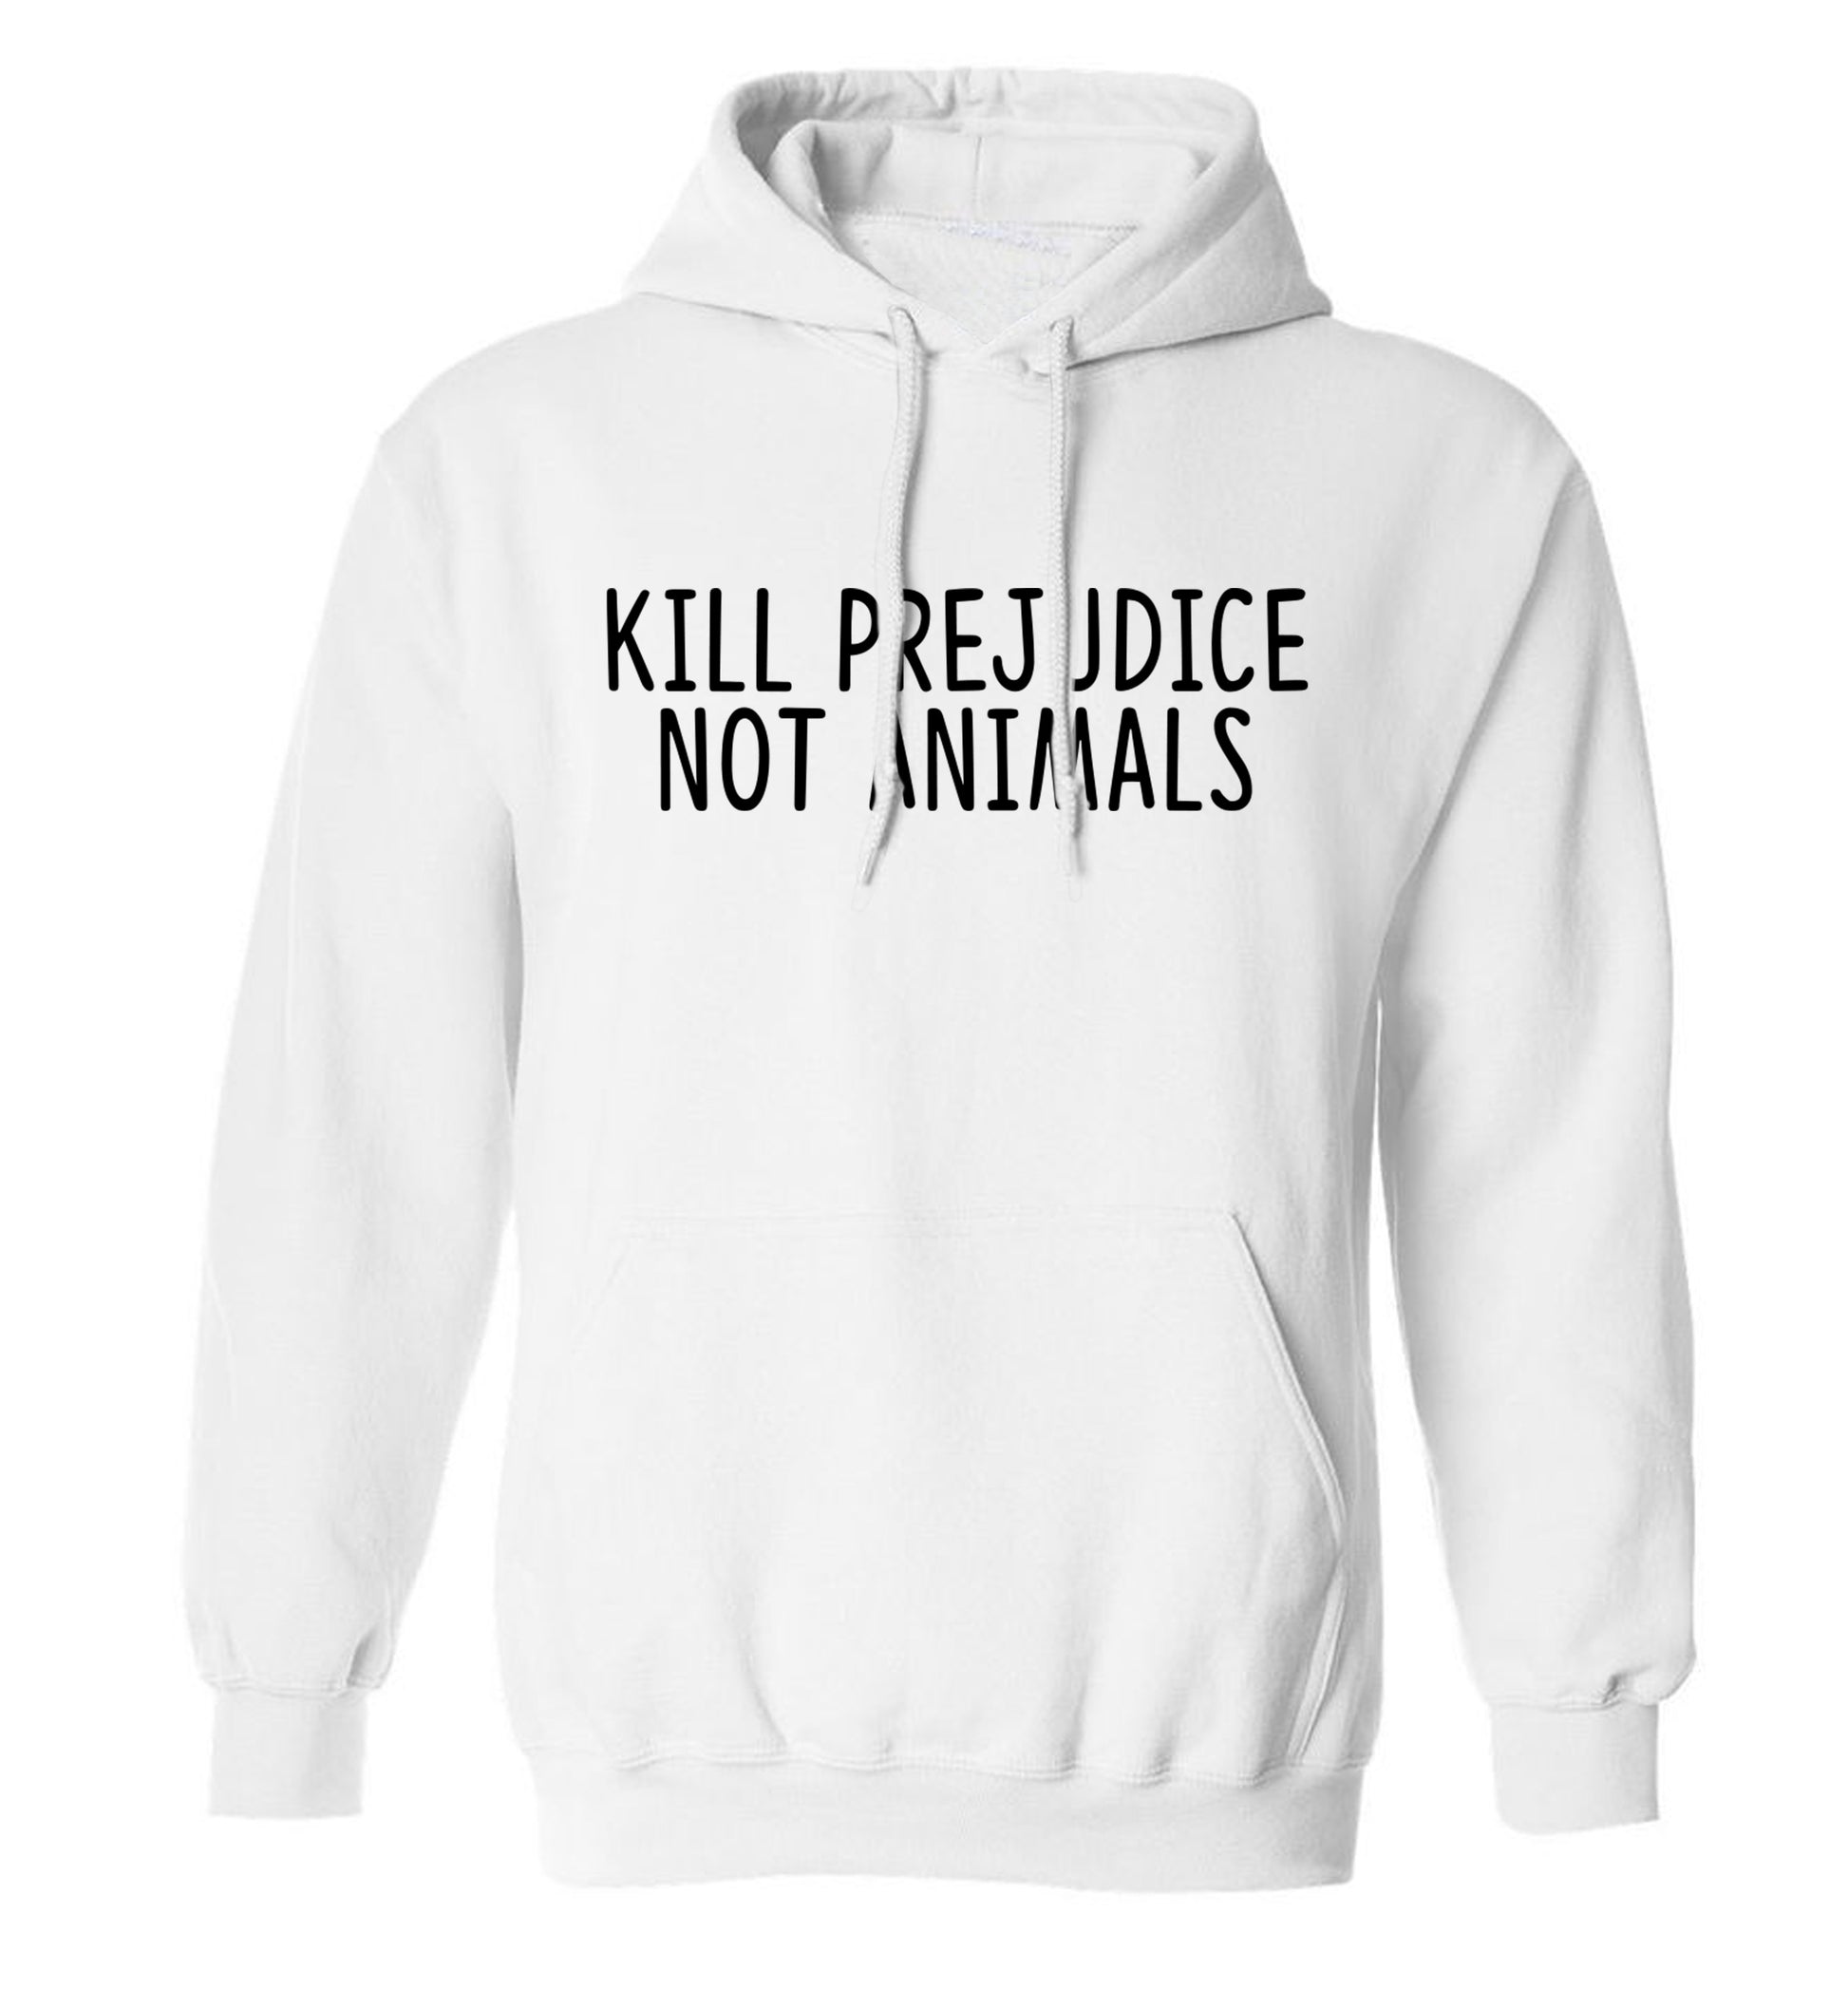 Kill Prejudice Not Animals adults unisex white hoodie 2XL